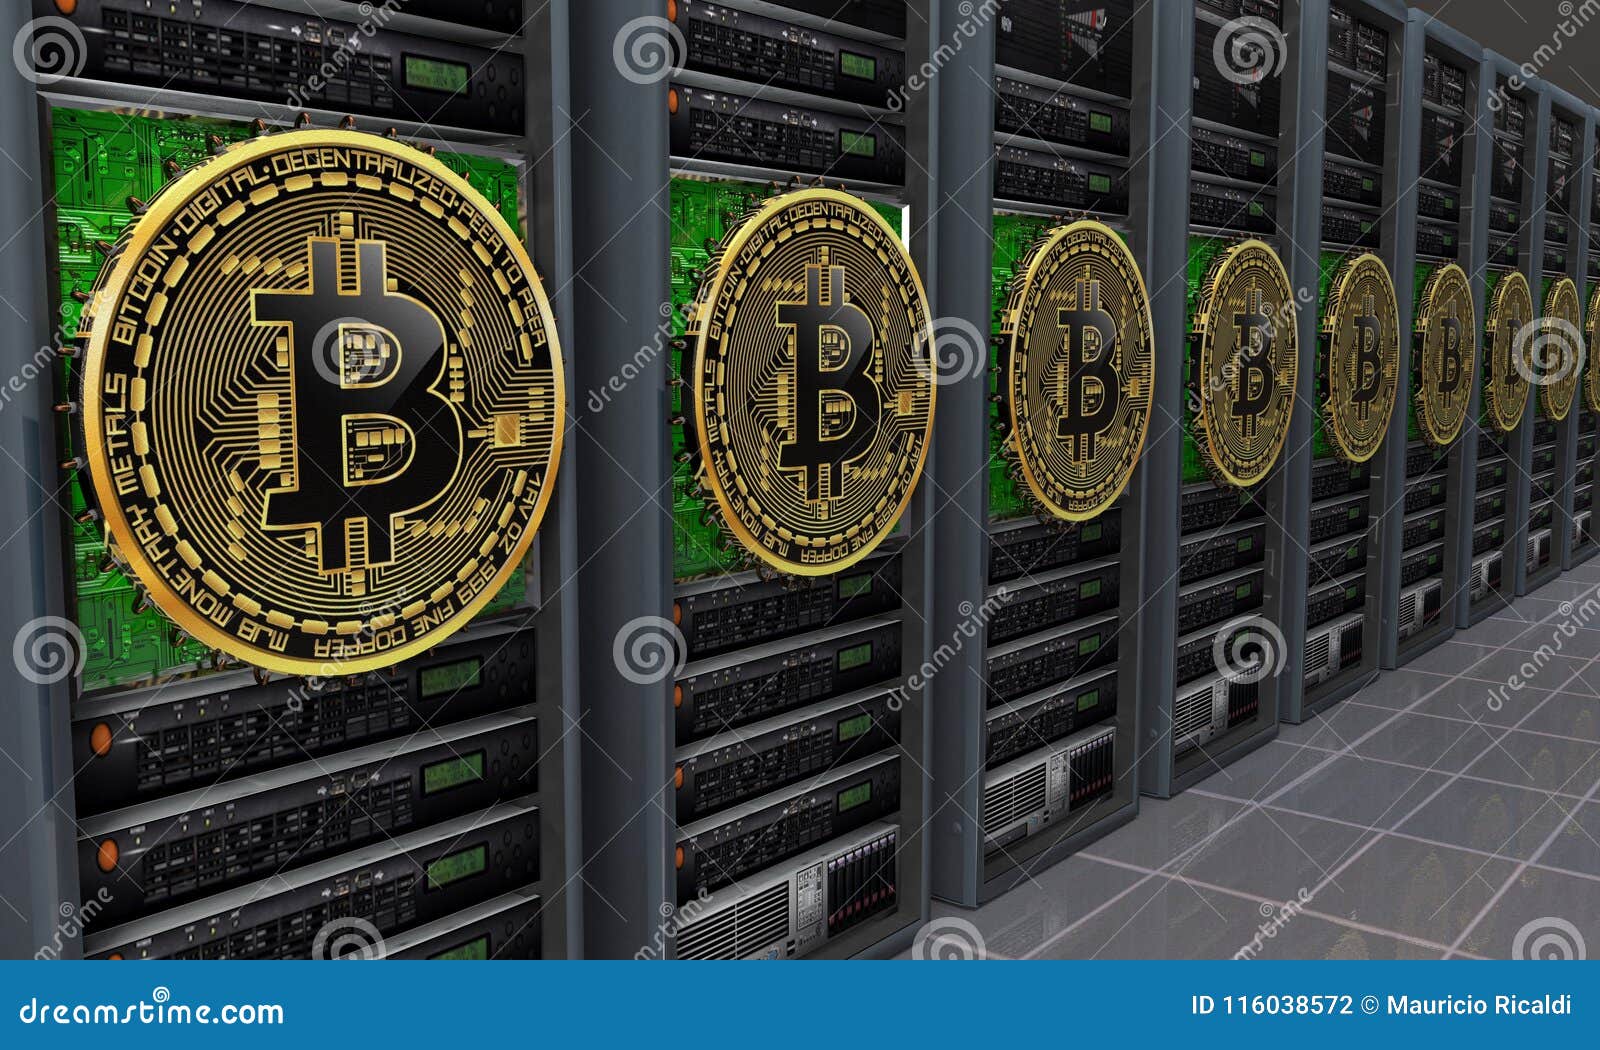 bitcoin server tradingview litecoin btc